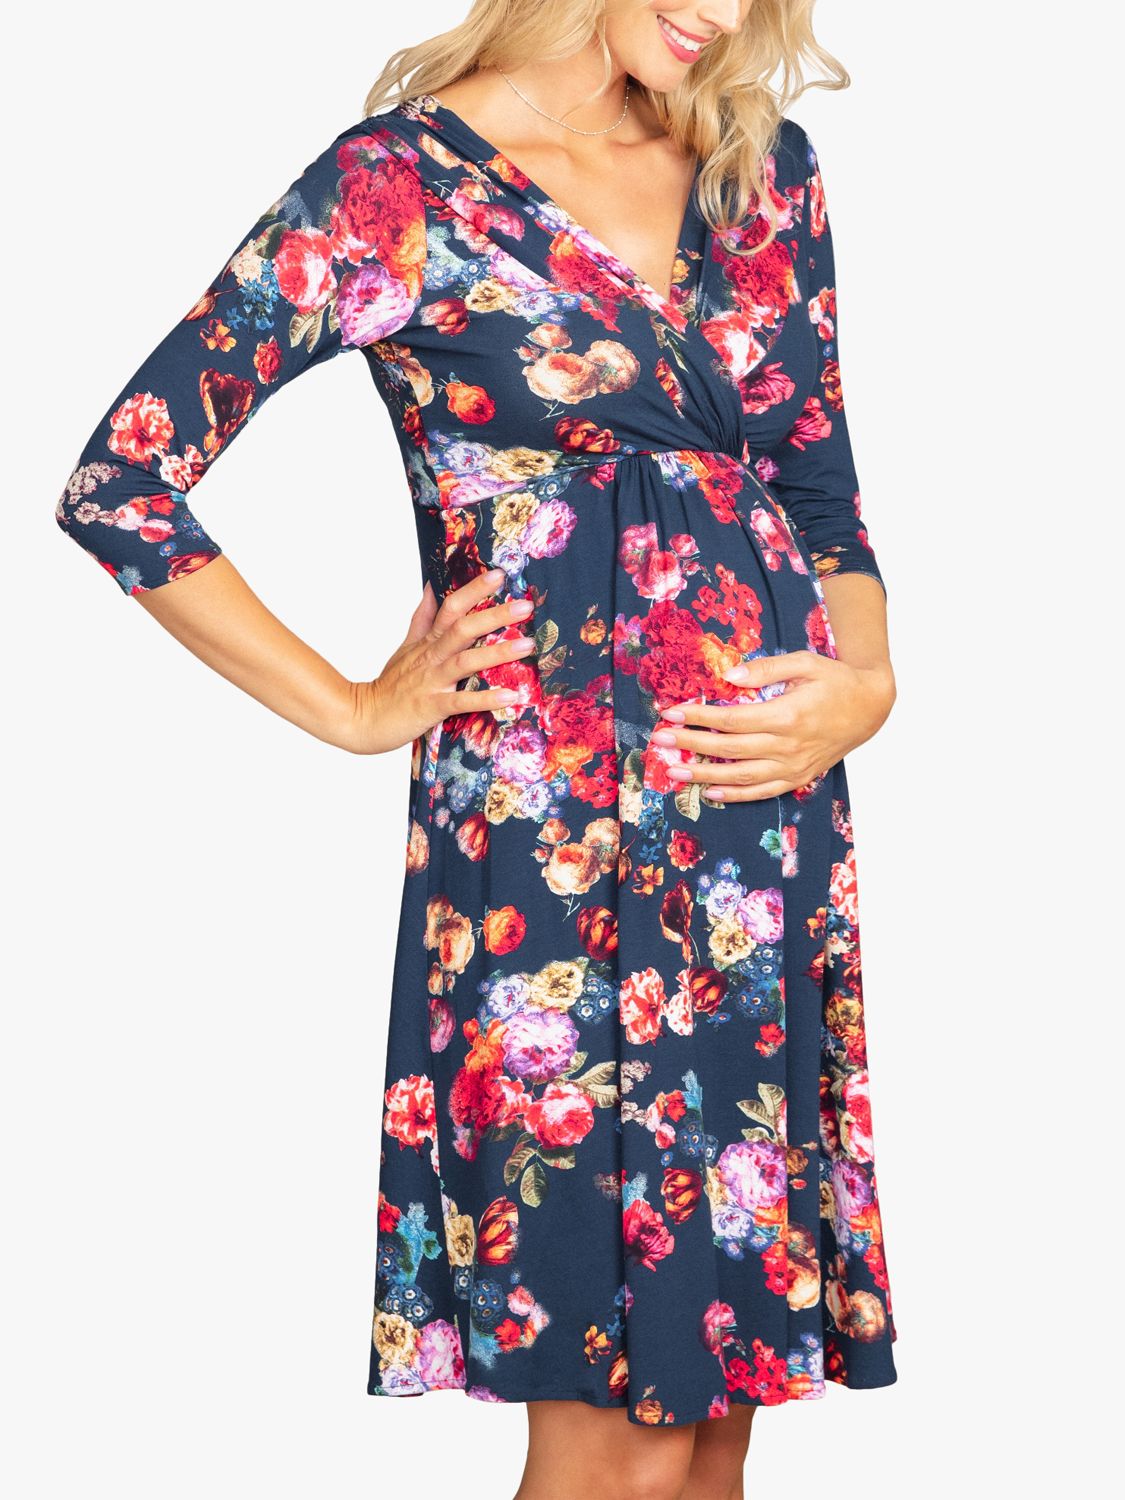 Tiffany Rose Willow Floral Maternity Dress, Midnight Garden, 6-8